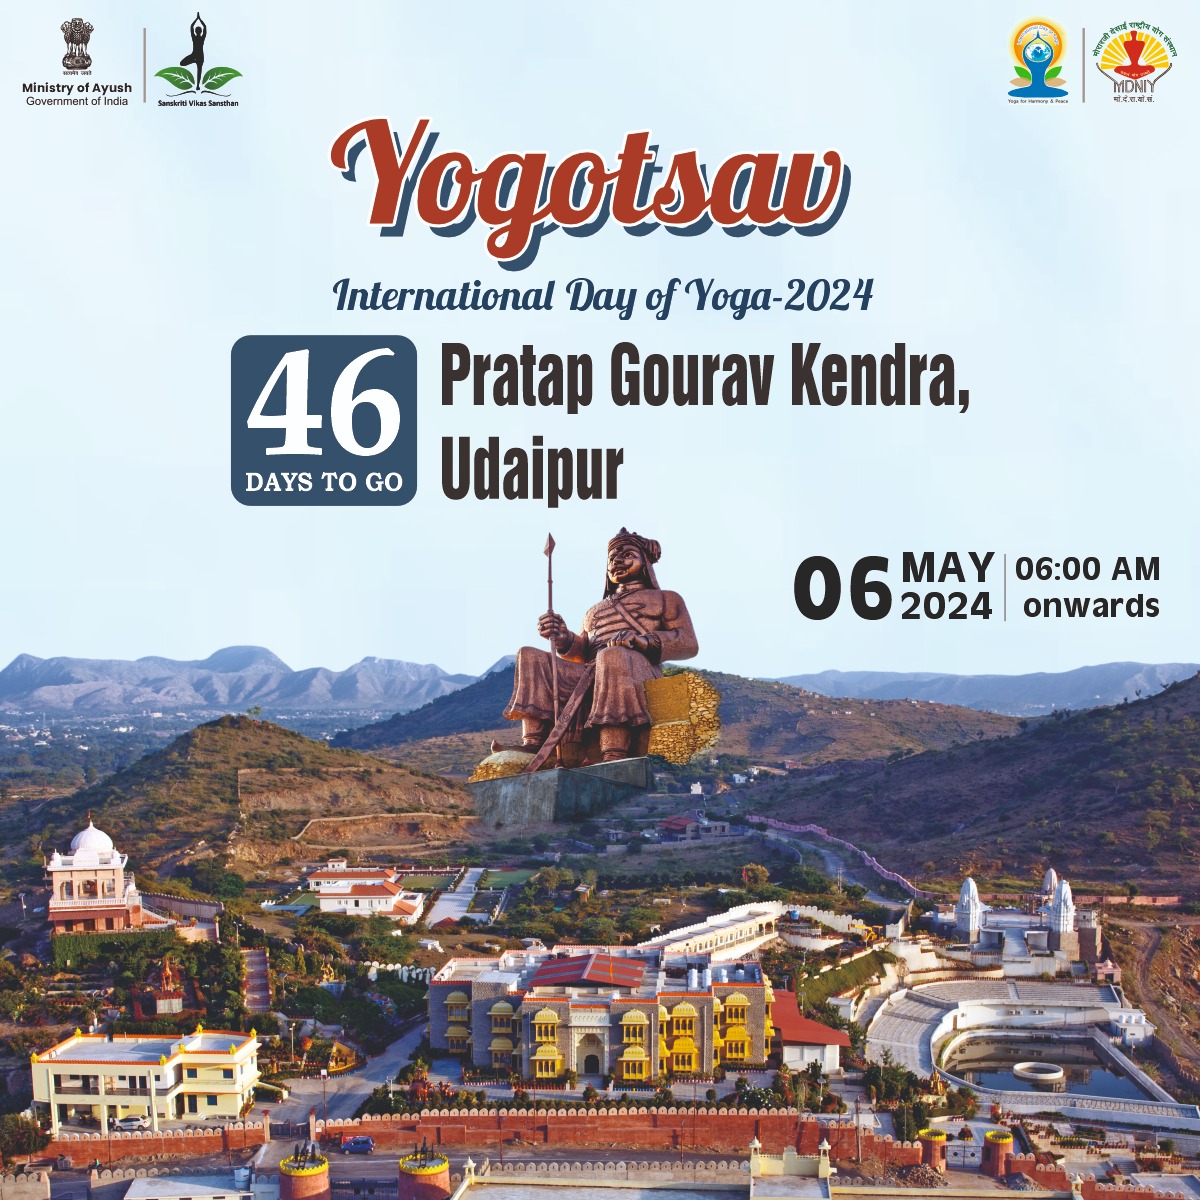 📍 Pratap Gourav Kendra, Udaipur 
📆 May 6, 2024
 4️⃣6️⃣Days to International Day of Yoga 2024

Sanskriti Vikas Sansthan in collaboration with MDNIY is organizing Yogotsav programme tomorrow.

#Yogotsav2024 #IDY2024 #yogainspiration